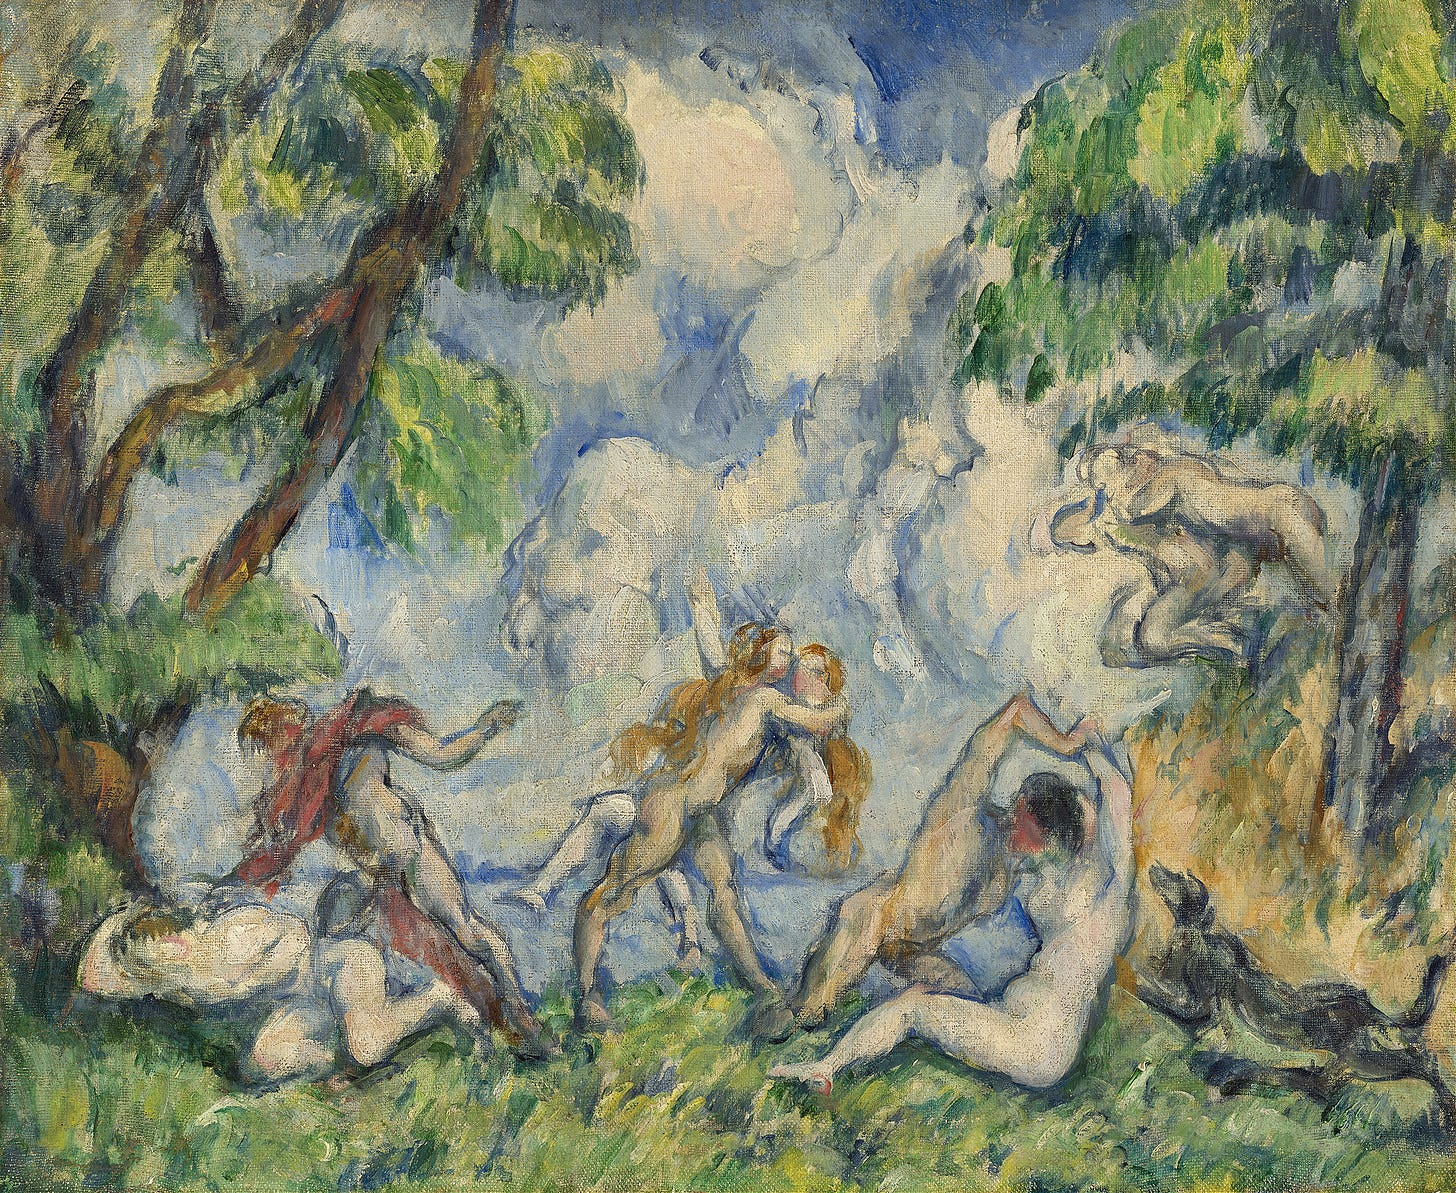 The Battle of Love (c. 1880) by Paul Cézanne